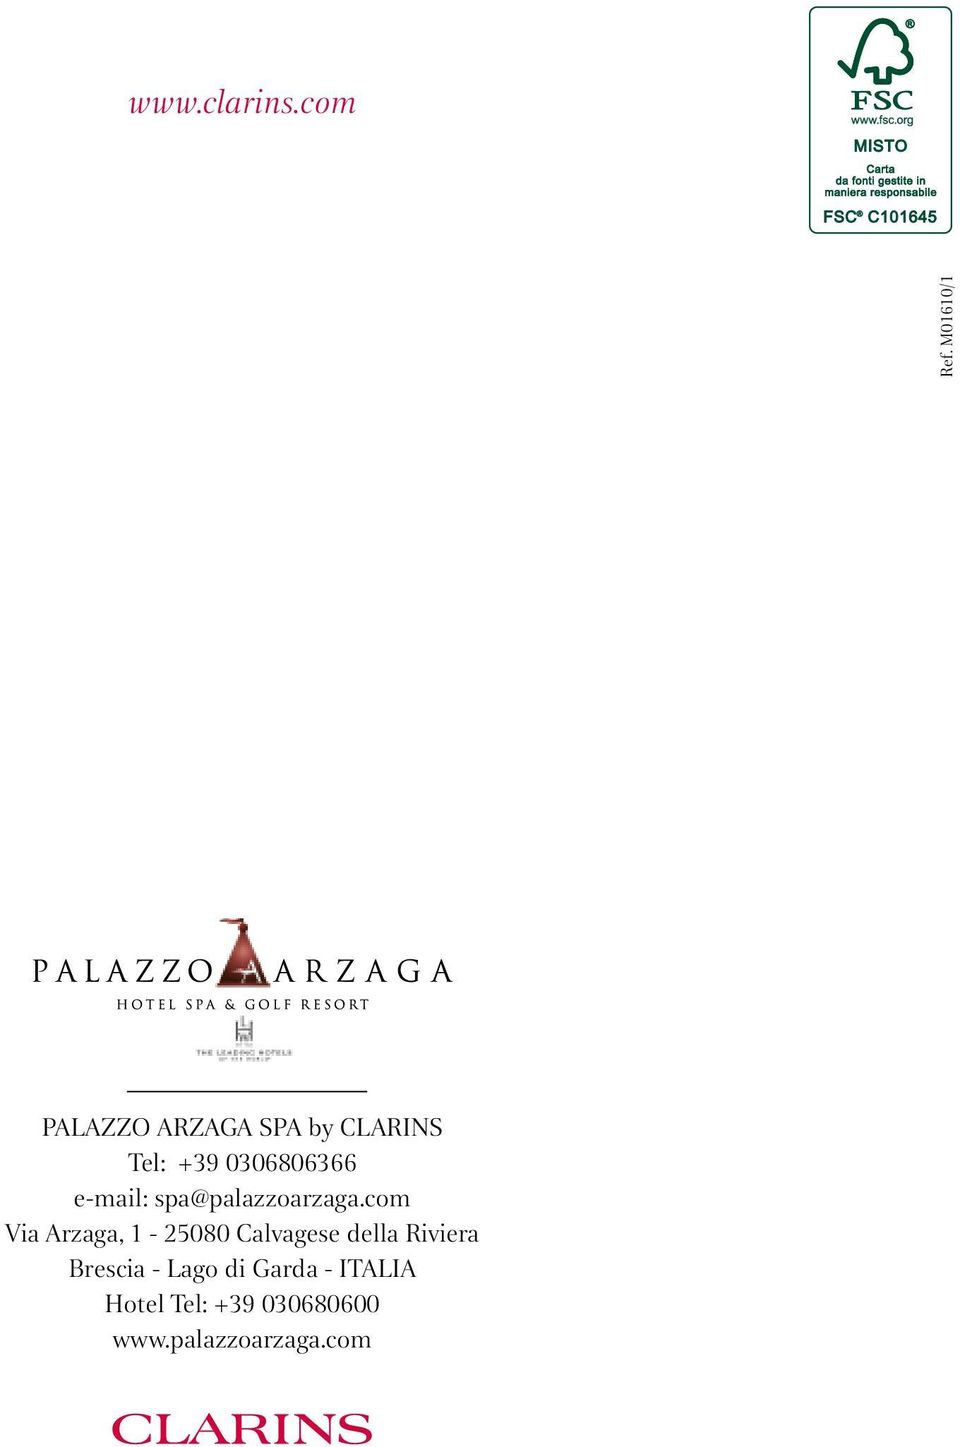 e-mail: spa@palazzoarzaga.